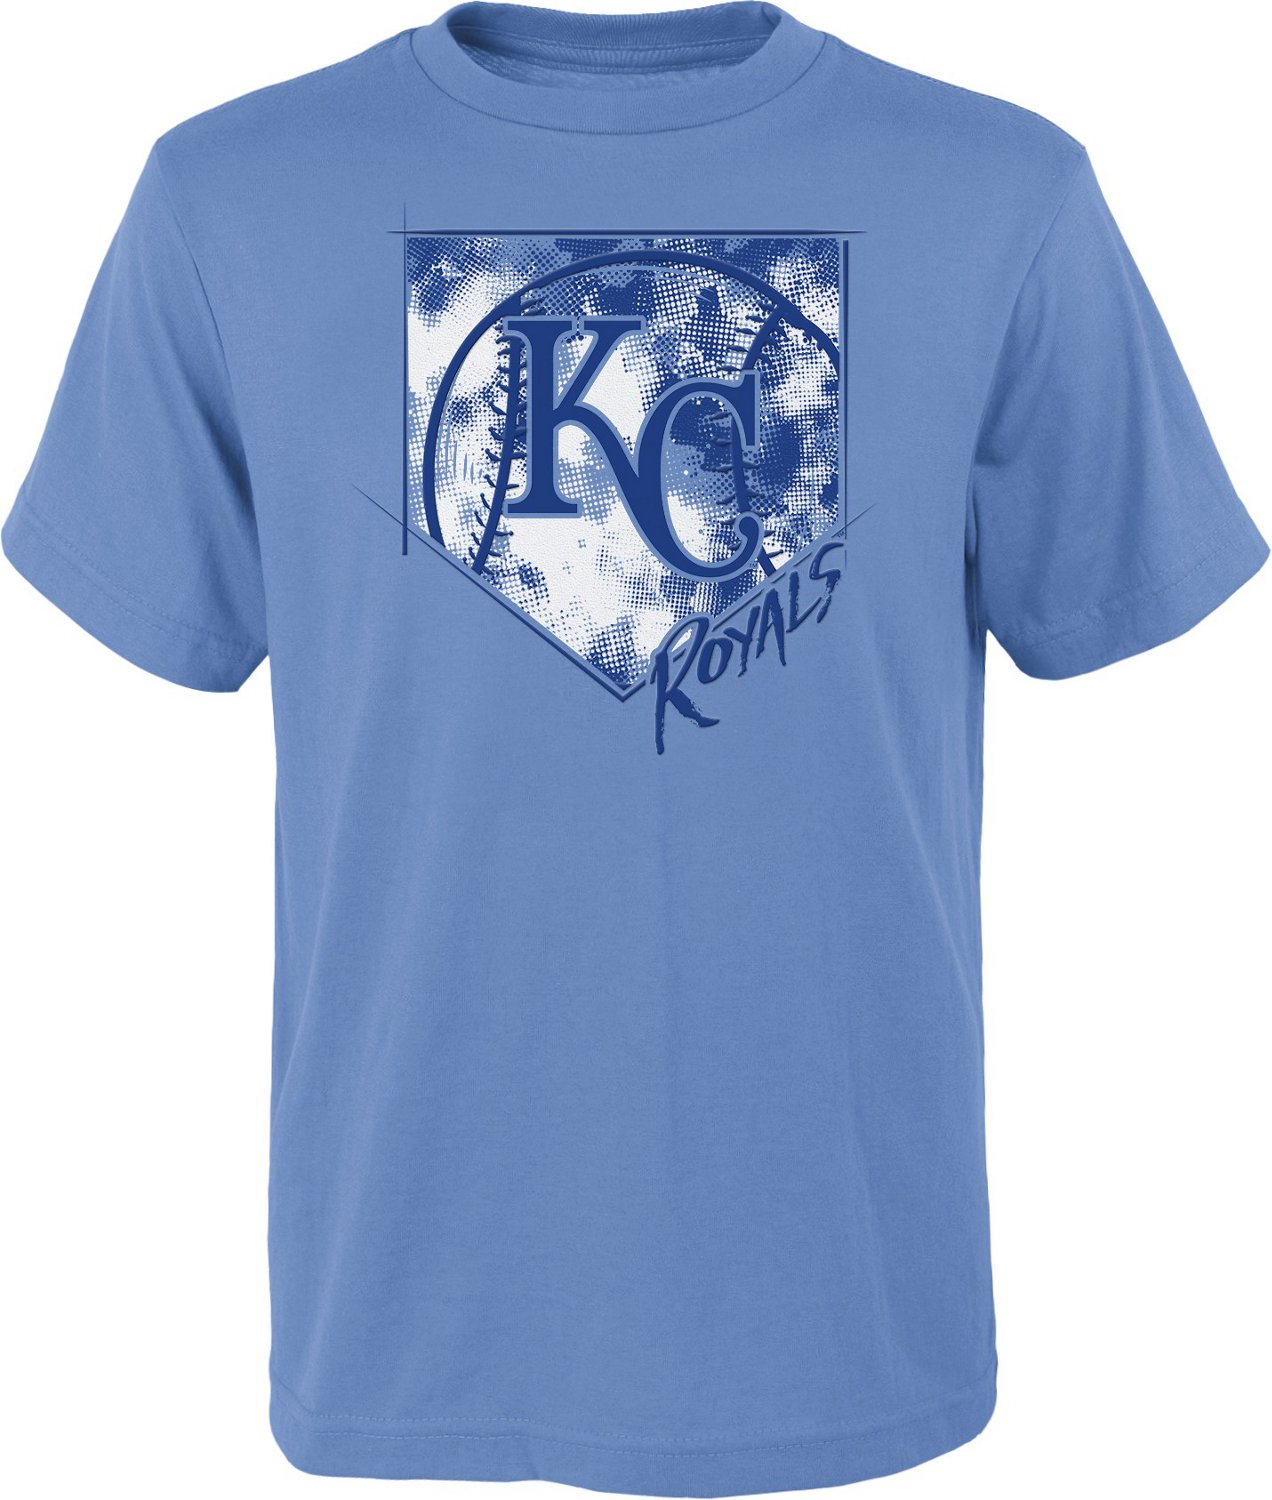 Outerstuff Boys' Kansas City Royals Home Field Graphic T-shirt